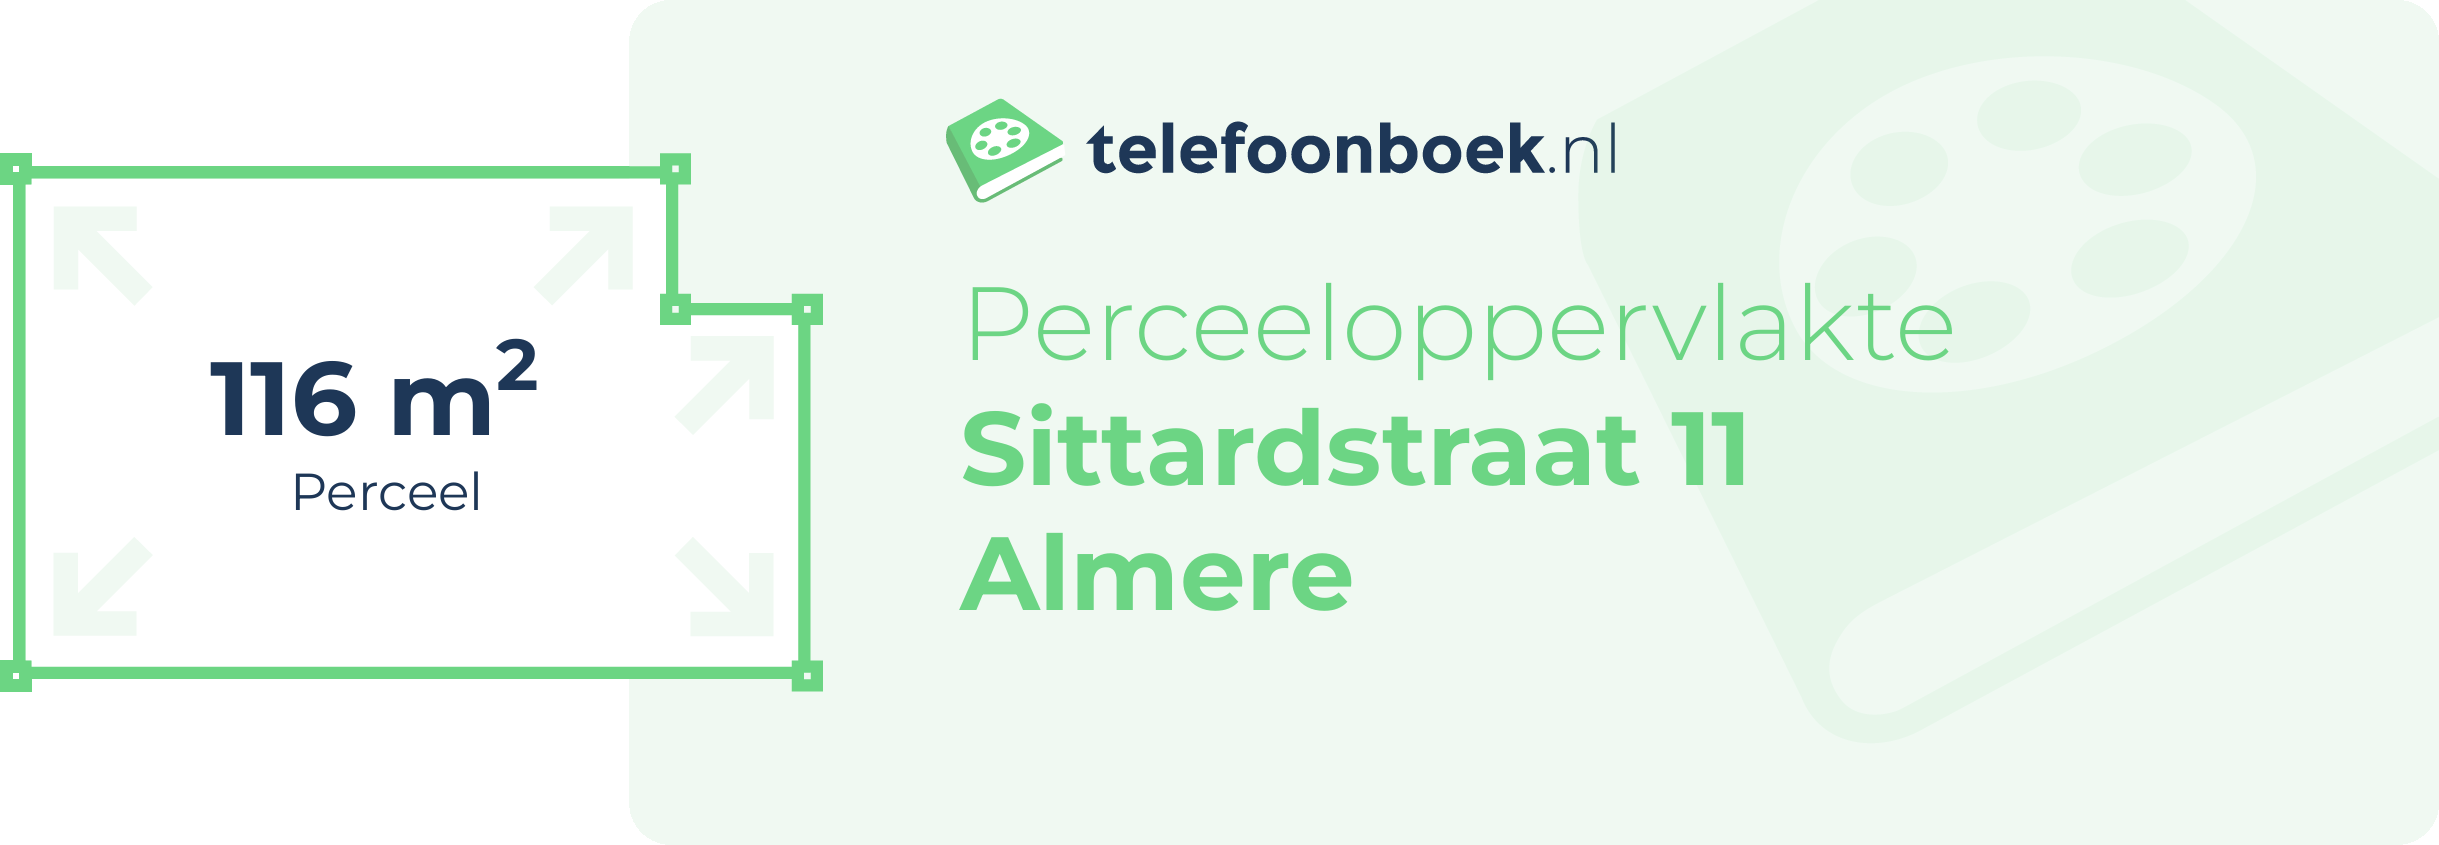 Perceeloppervlakte Sittardstraat 11 Almere